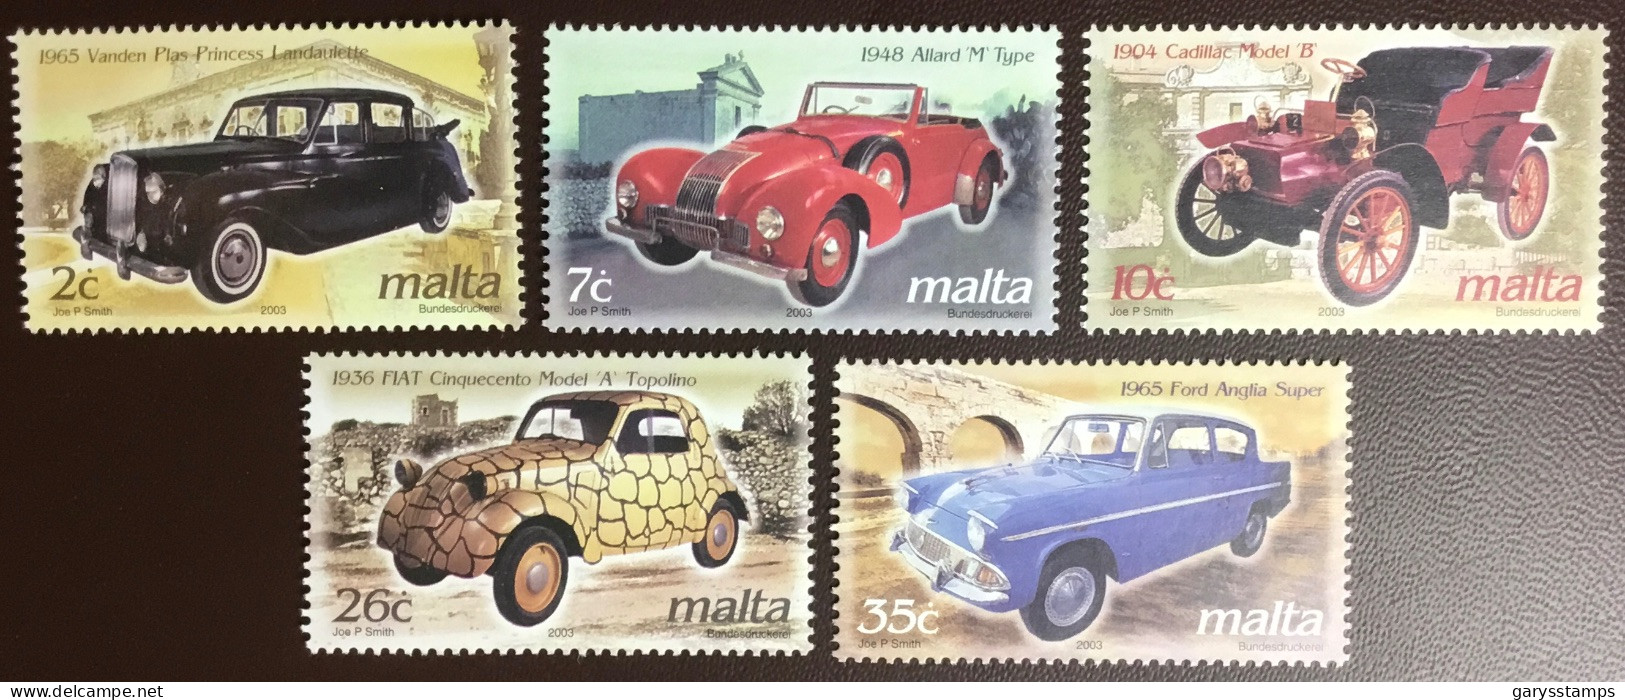 Malta 2003 Vintage Cars MNH - Malte